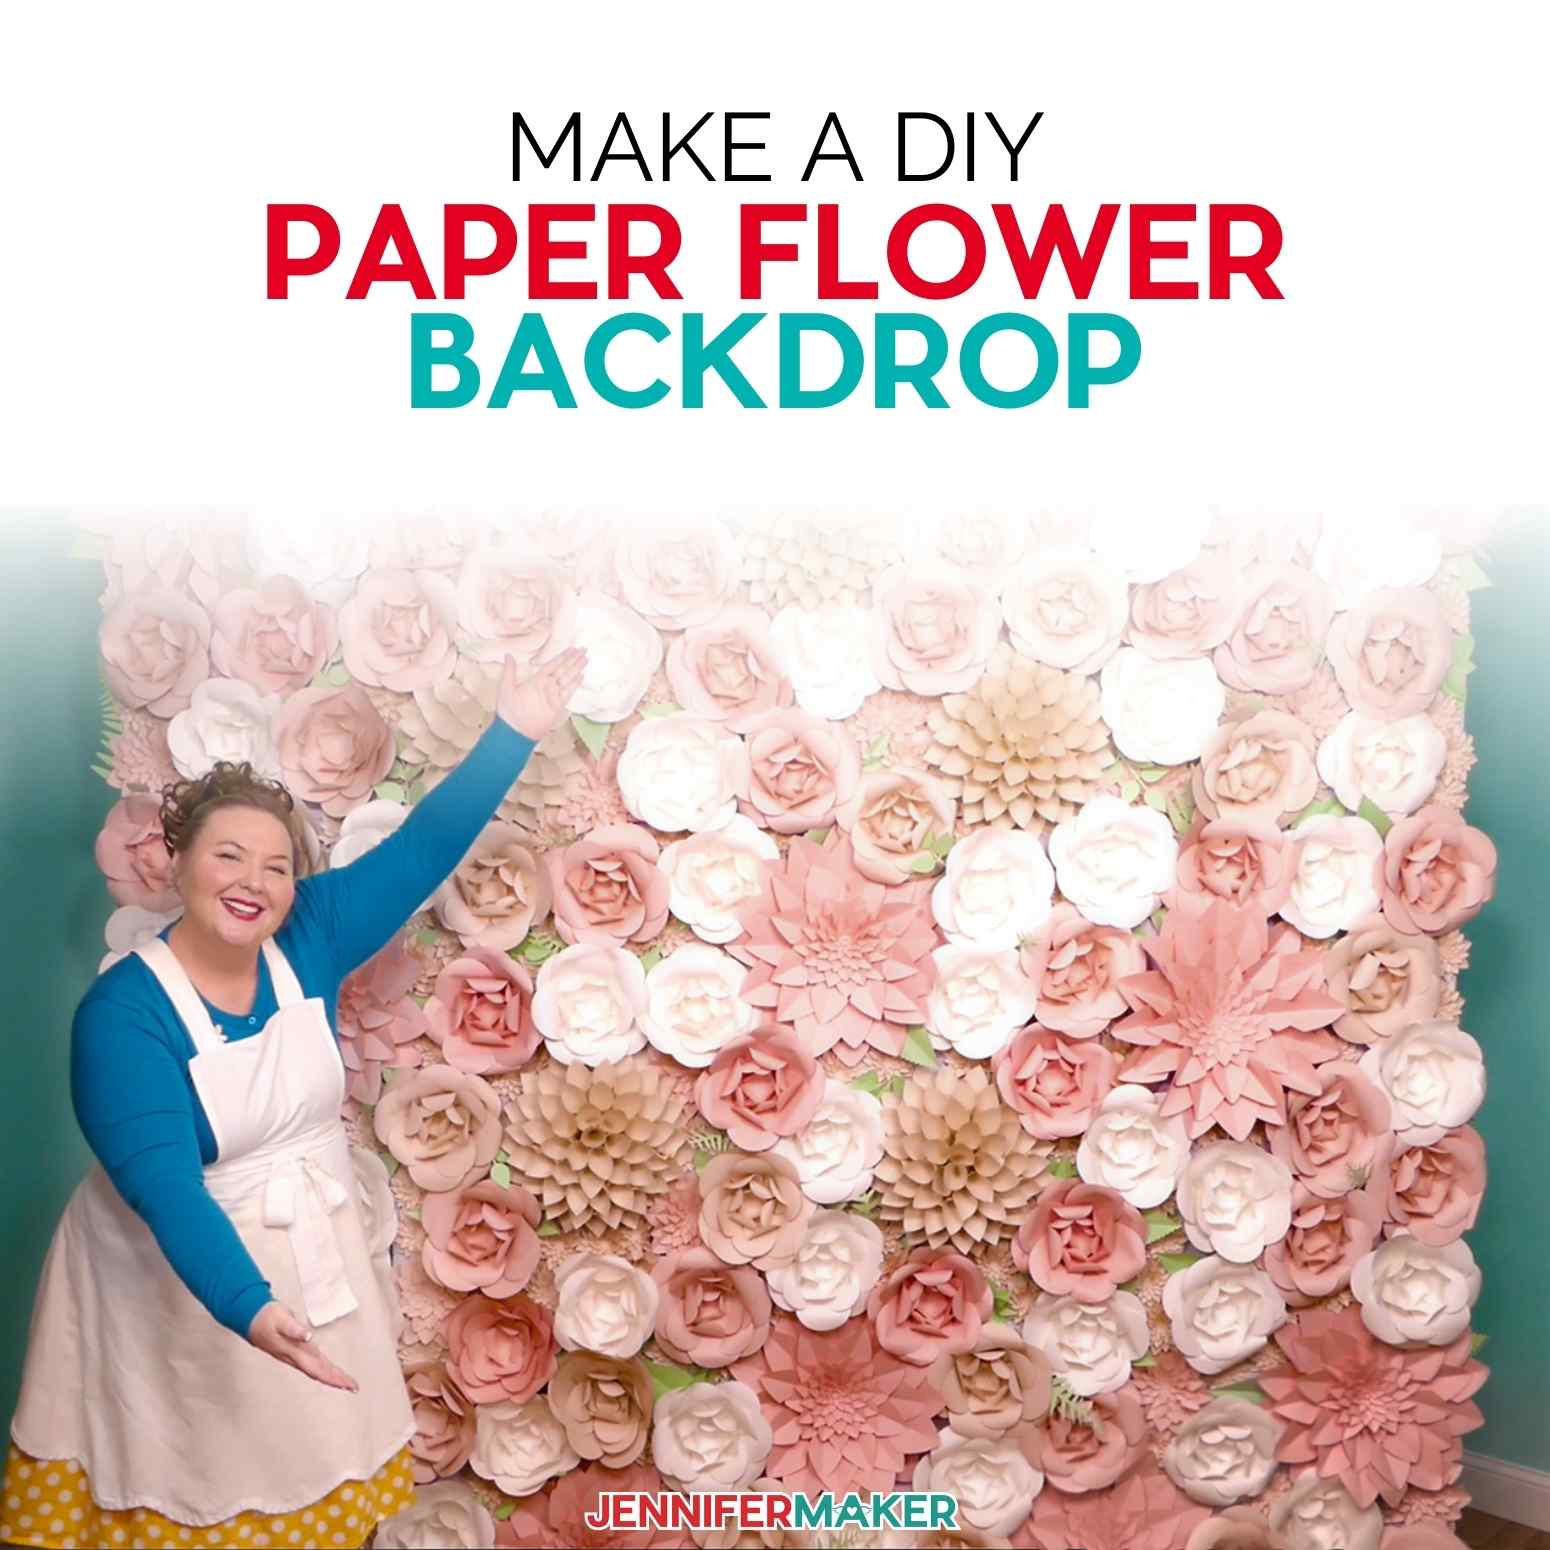 How To Make Flower Wall Paper Flower Backdrop Tutorial: Make a Full 8'x8' Wall of Flowers! -  Jennifer Maker